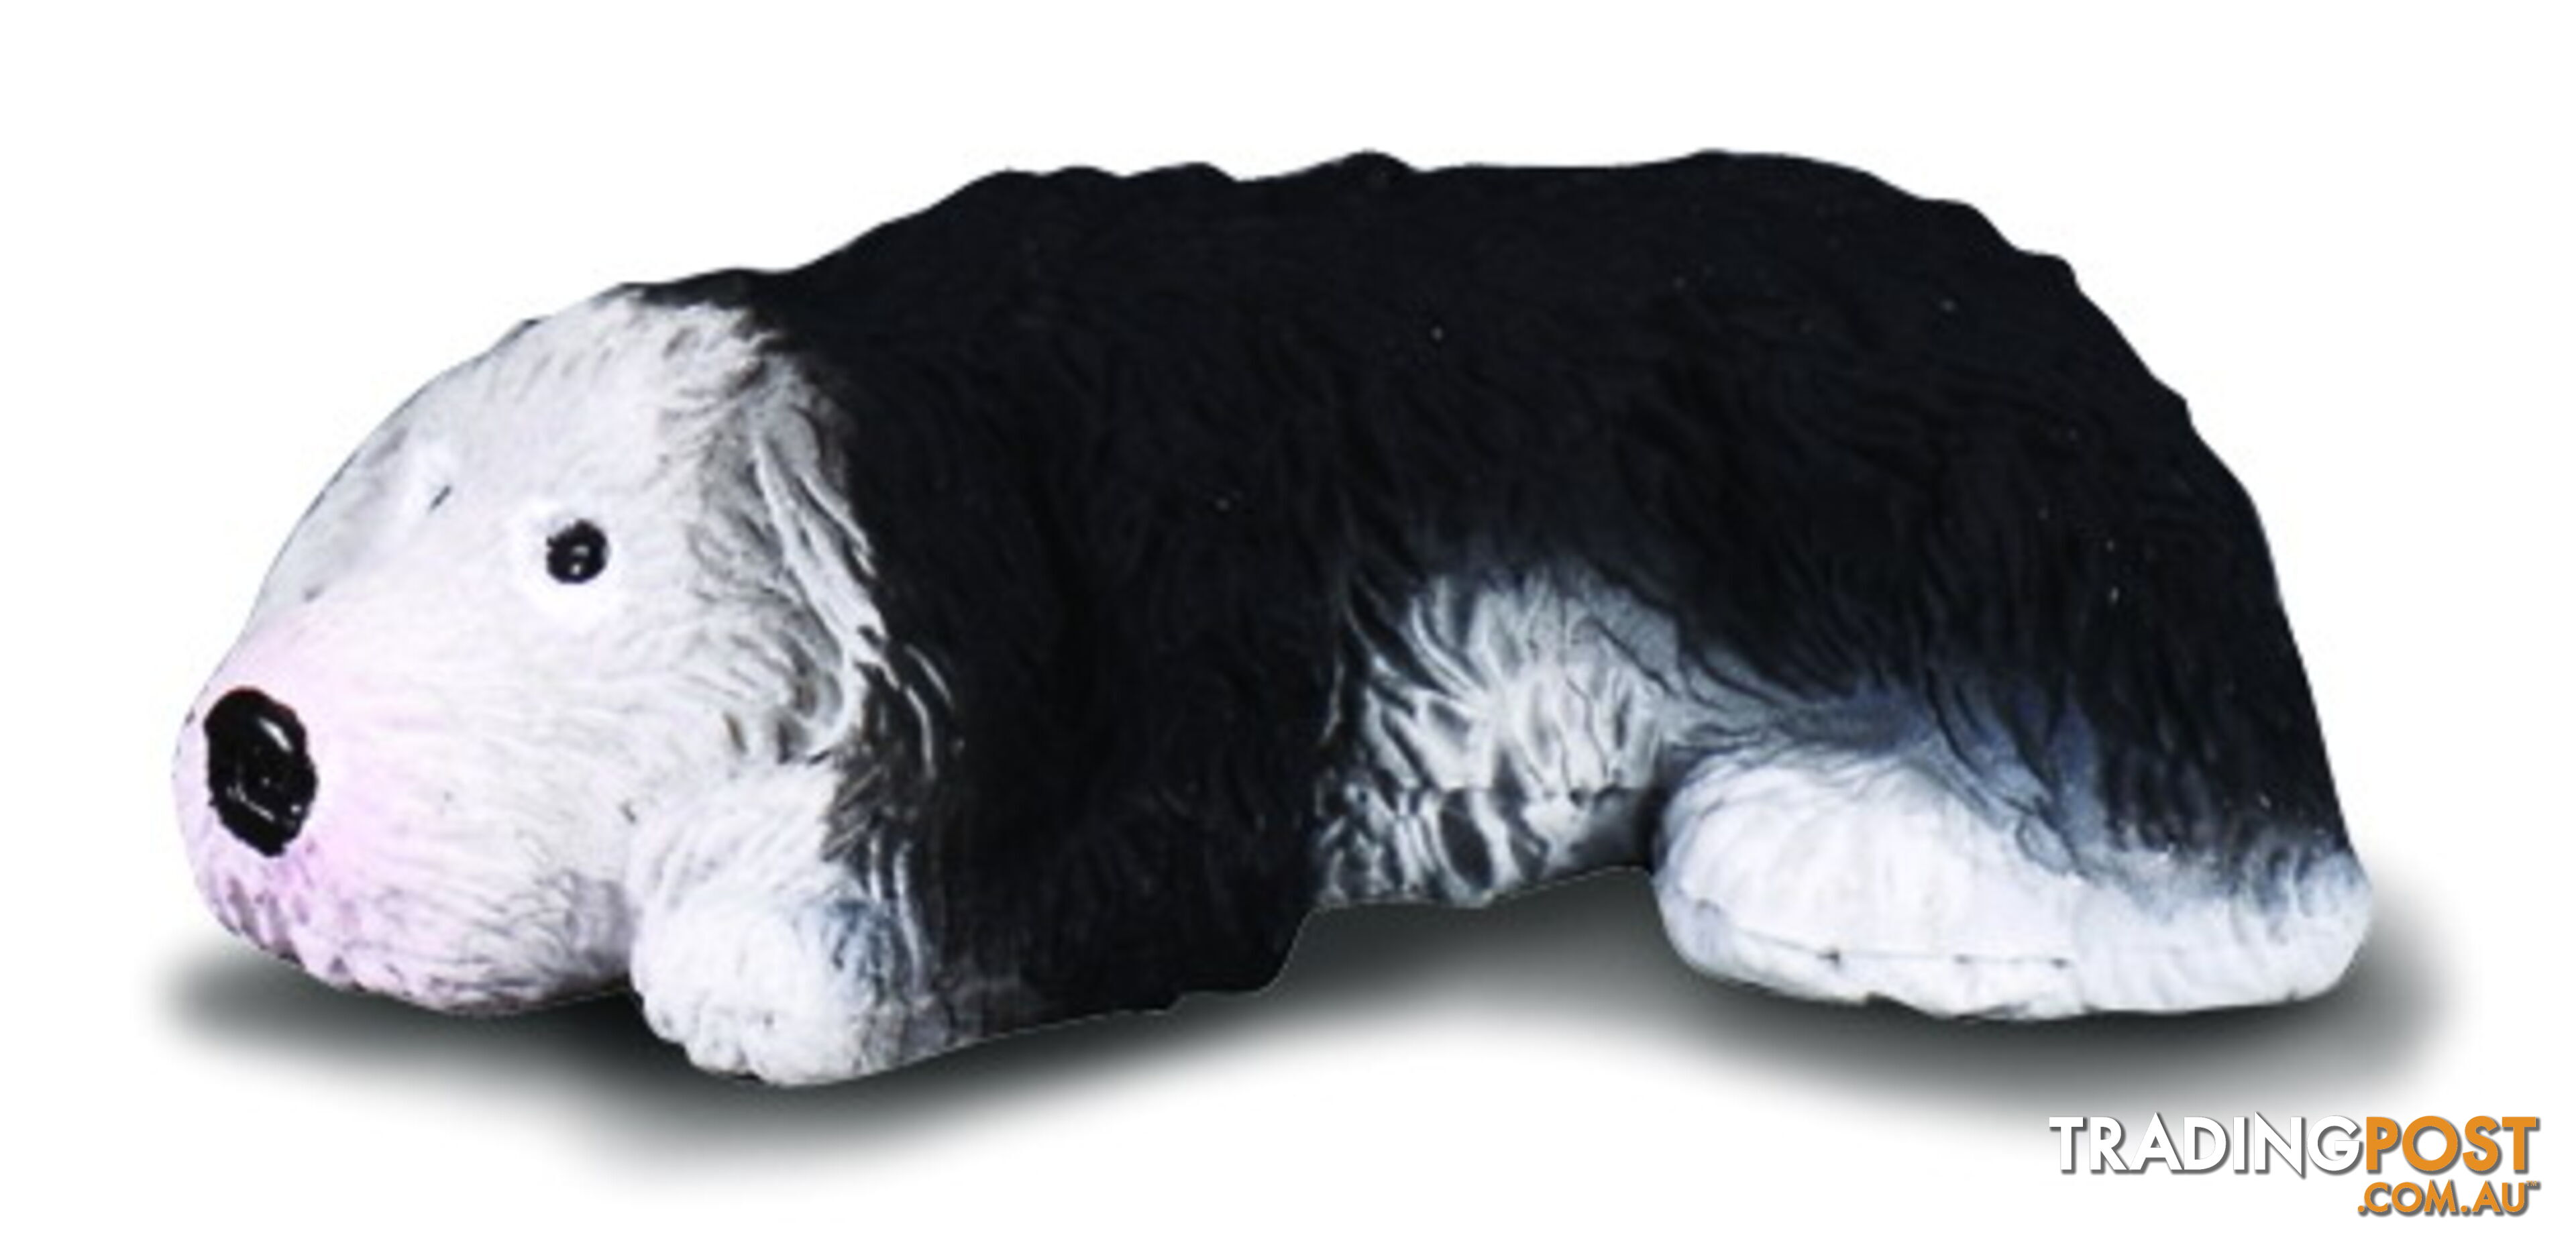 CollectA Old English Sheepdog Puppy Animal Figurine - Rpco88067 - 4892900880679